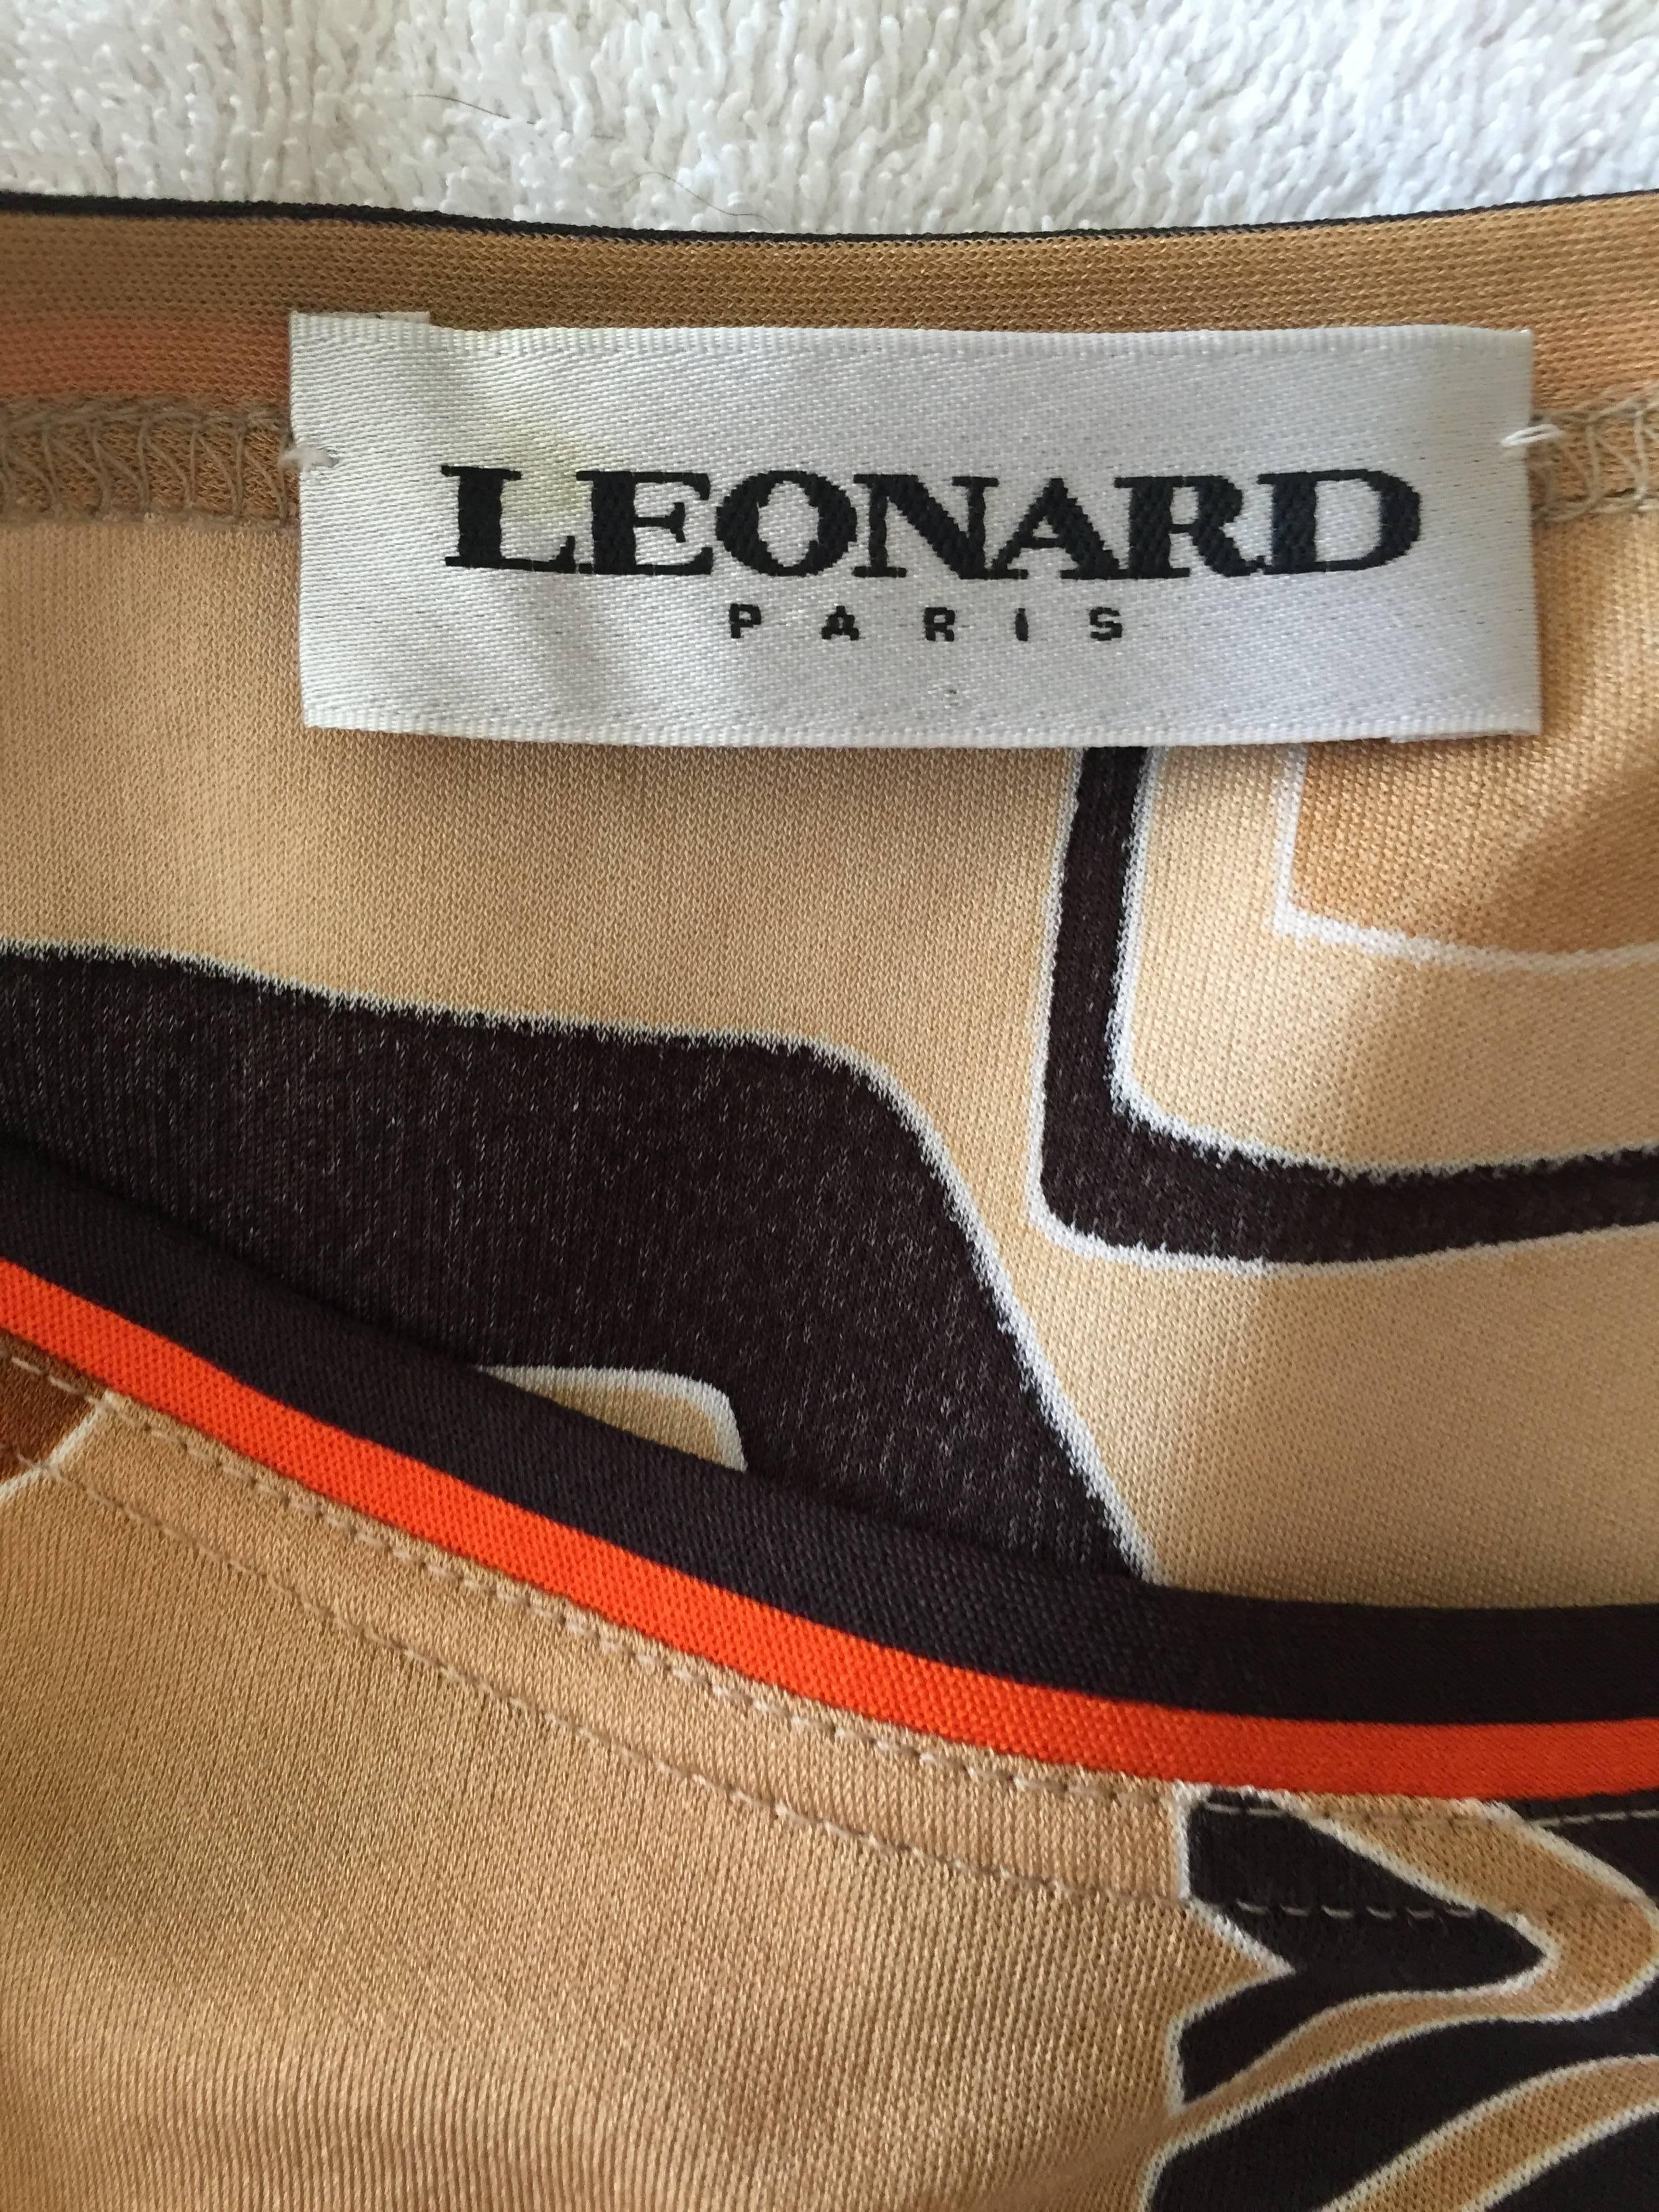 Leonard Paris 1960's Pattern Silk Jersey Mini Dress with Belt.
Size 38
Bust 40